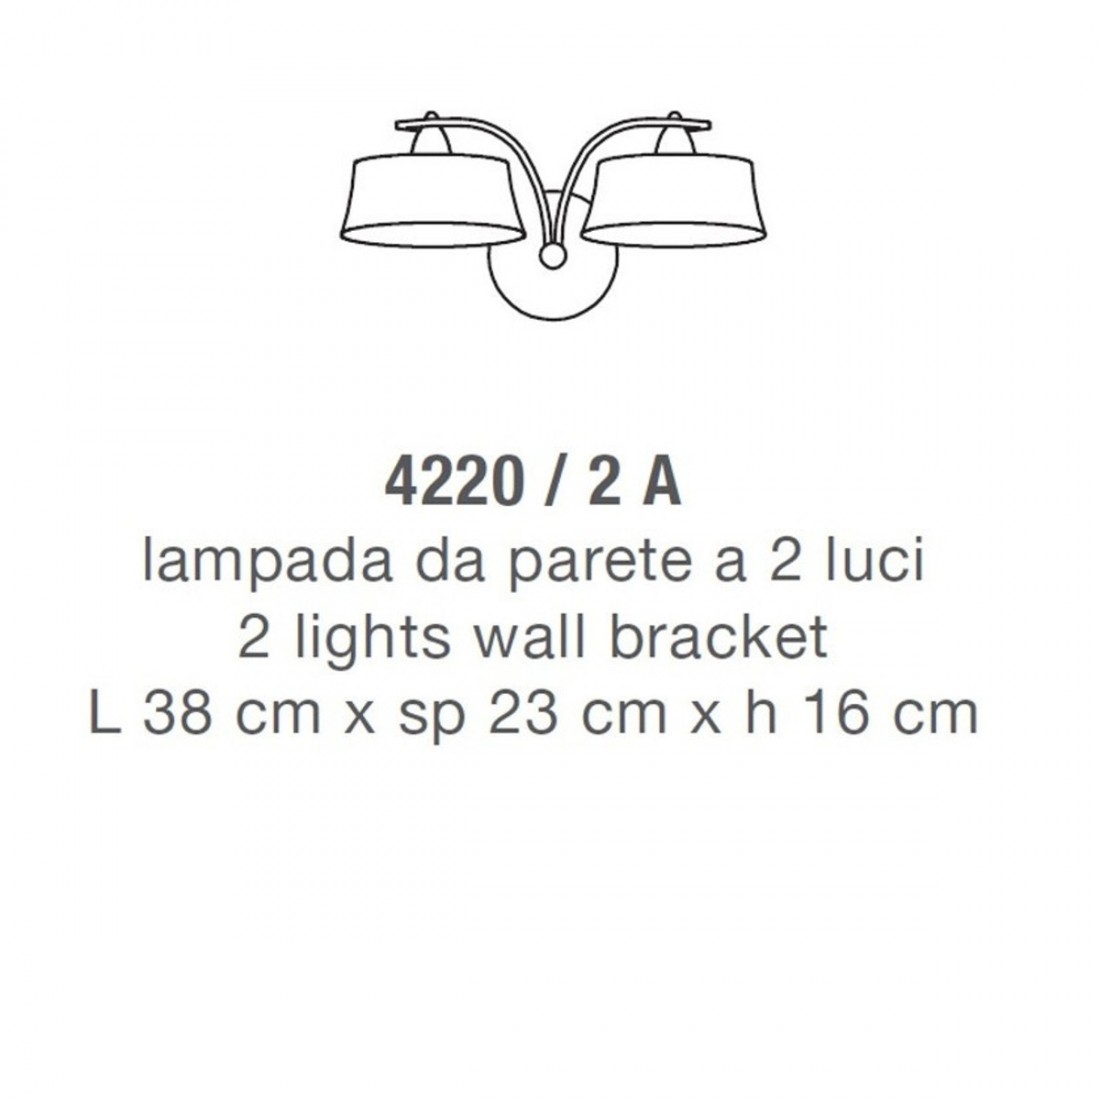 Lam 4220 2A klassische Wandleuchte Made in Italy.